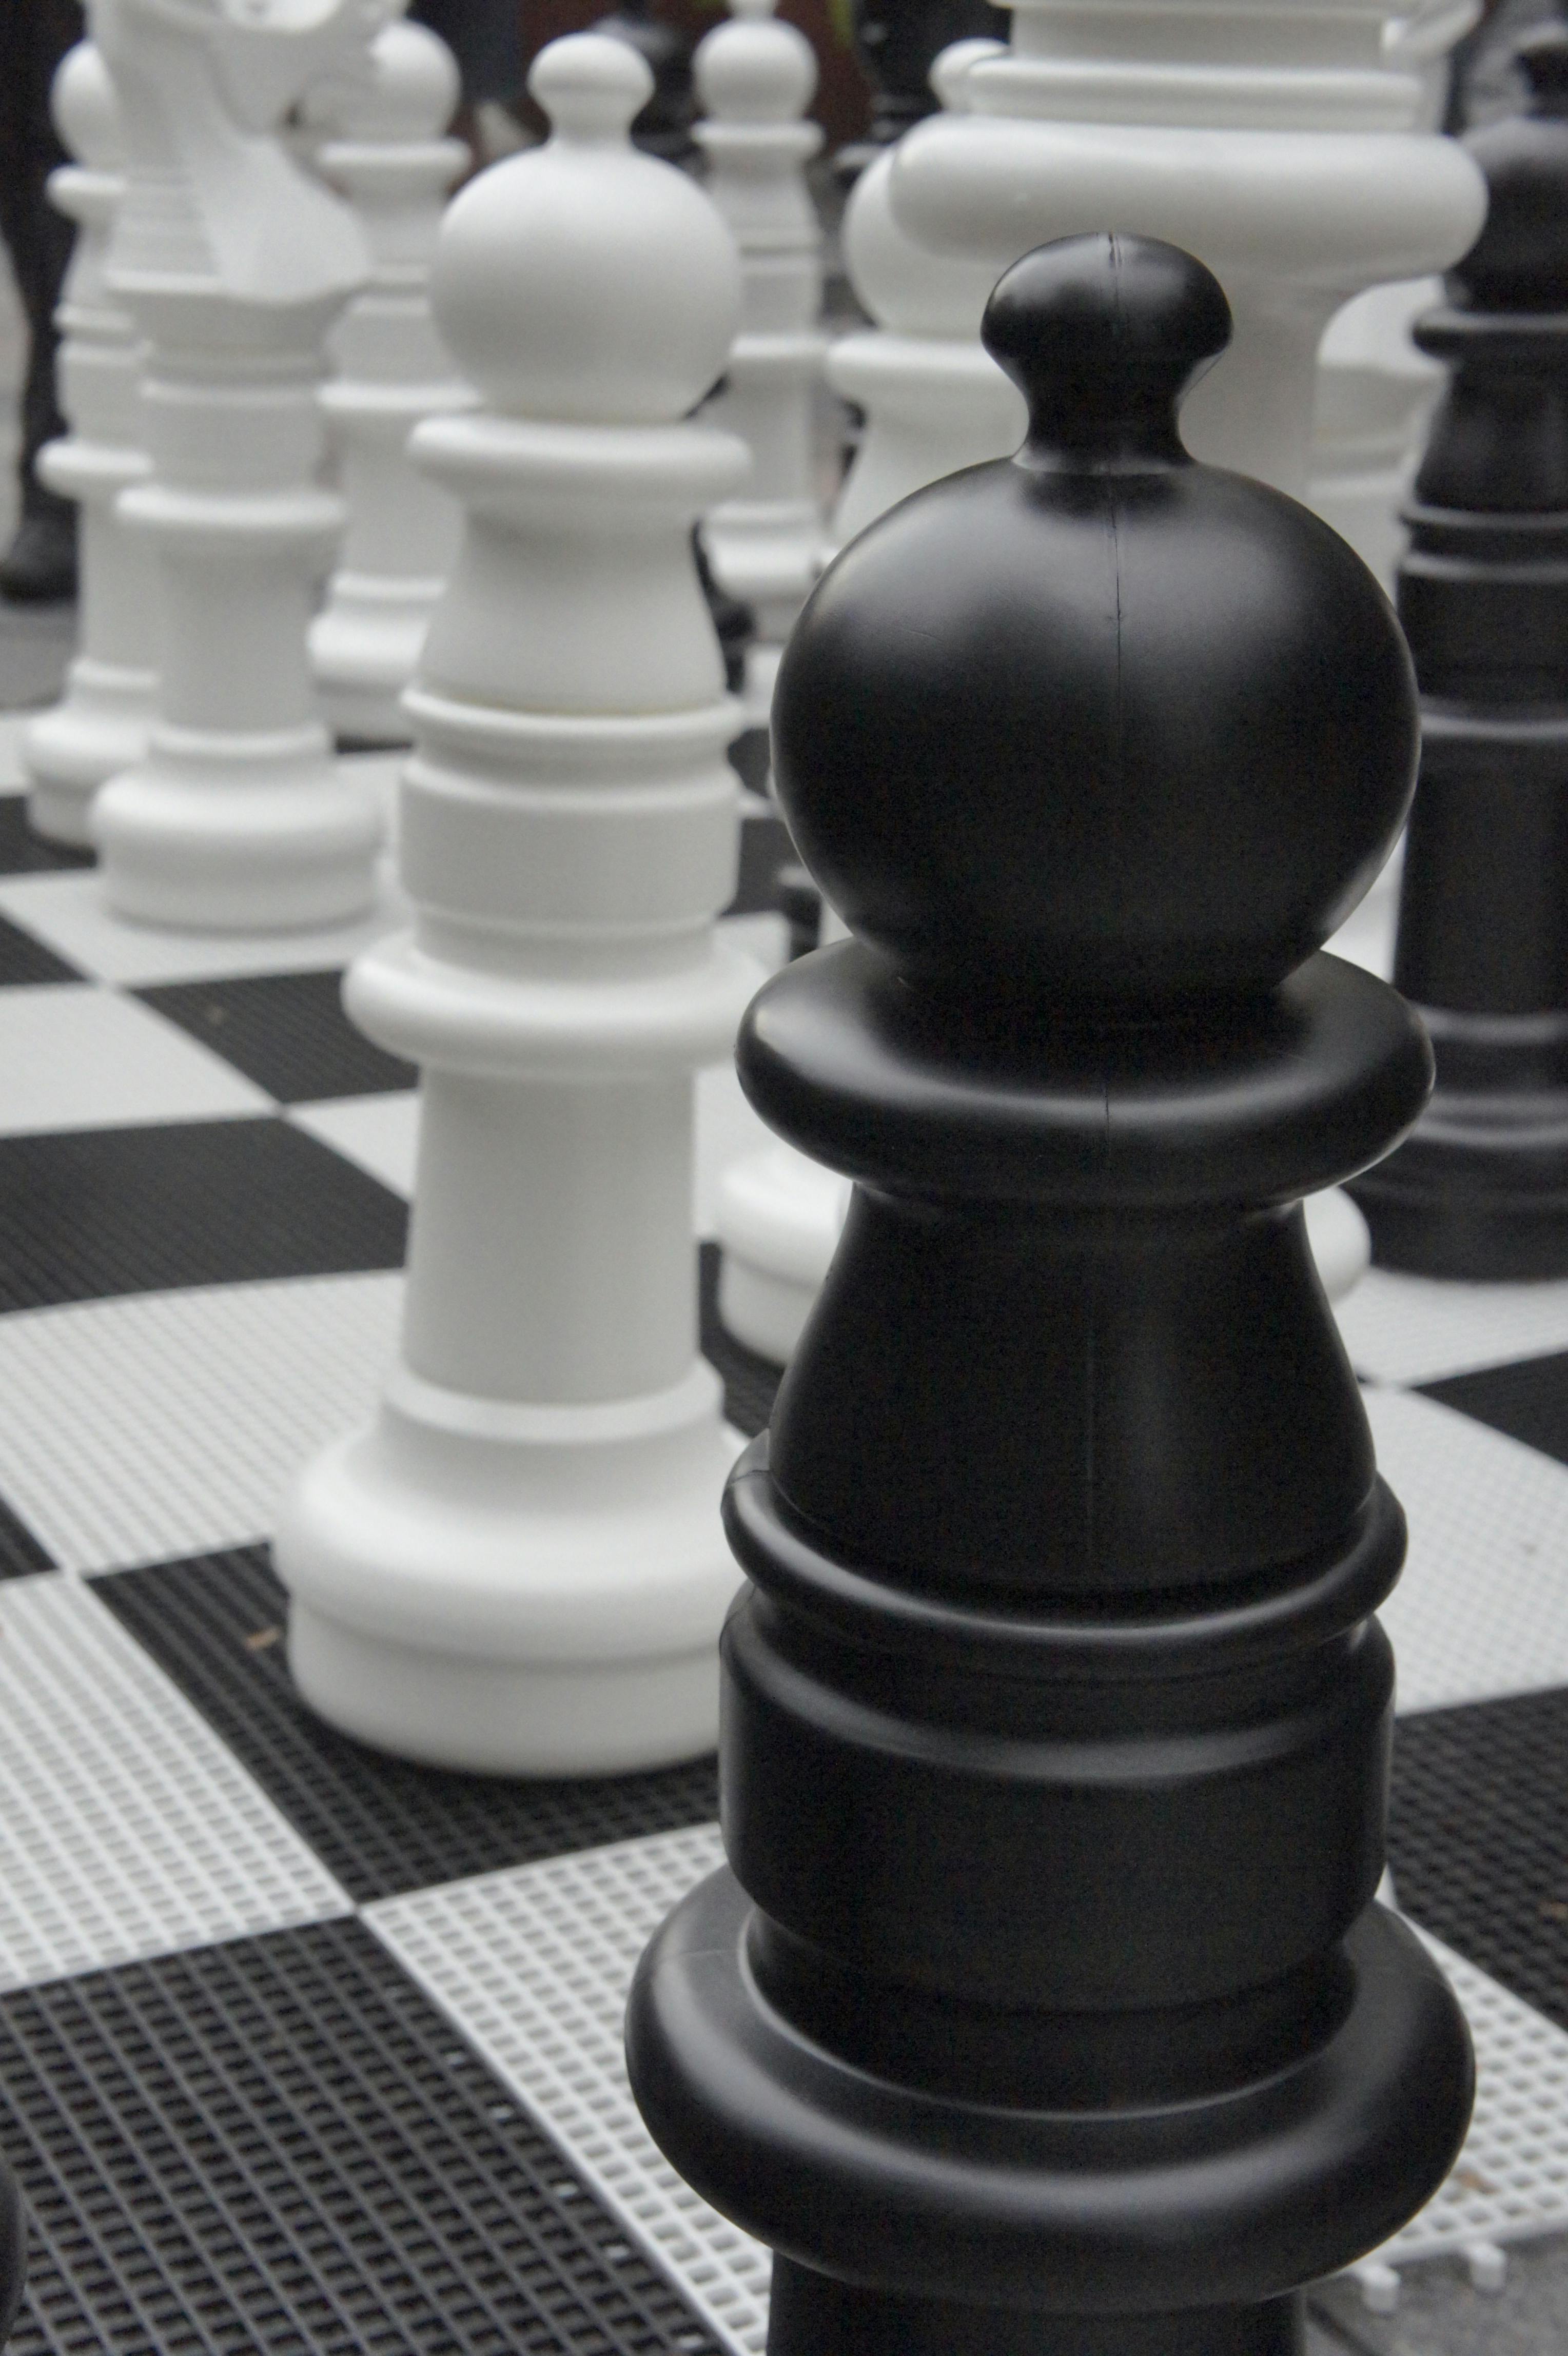 Free stock photo of black & white, chess, chessboard